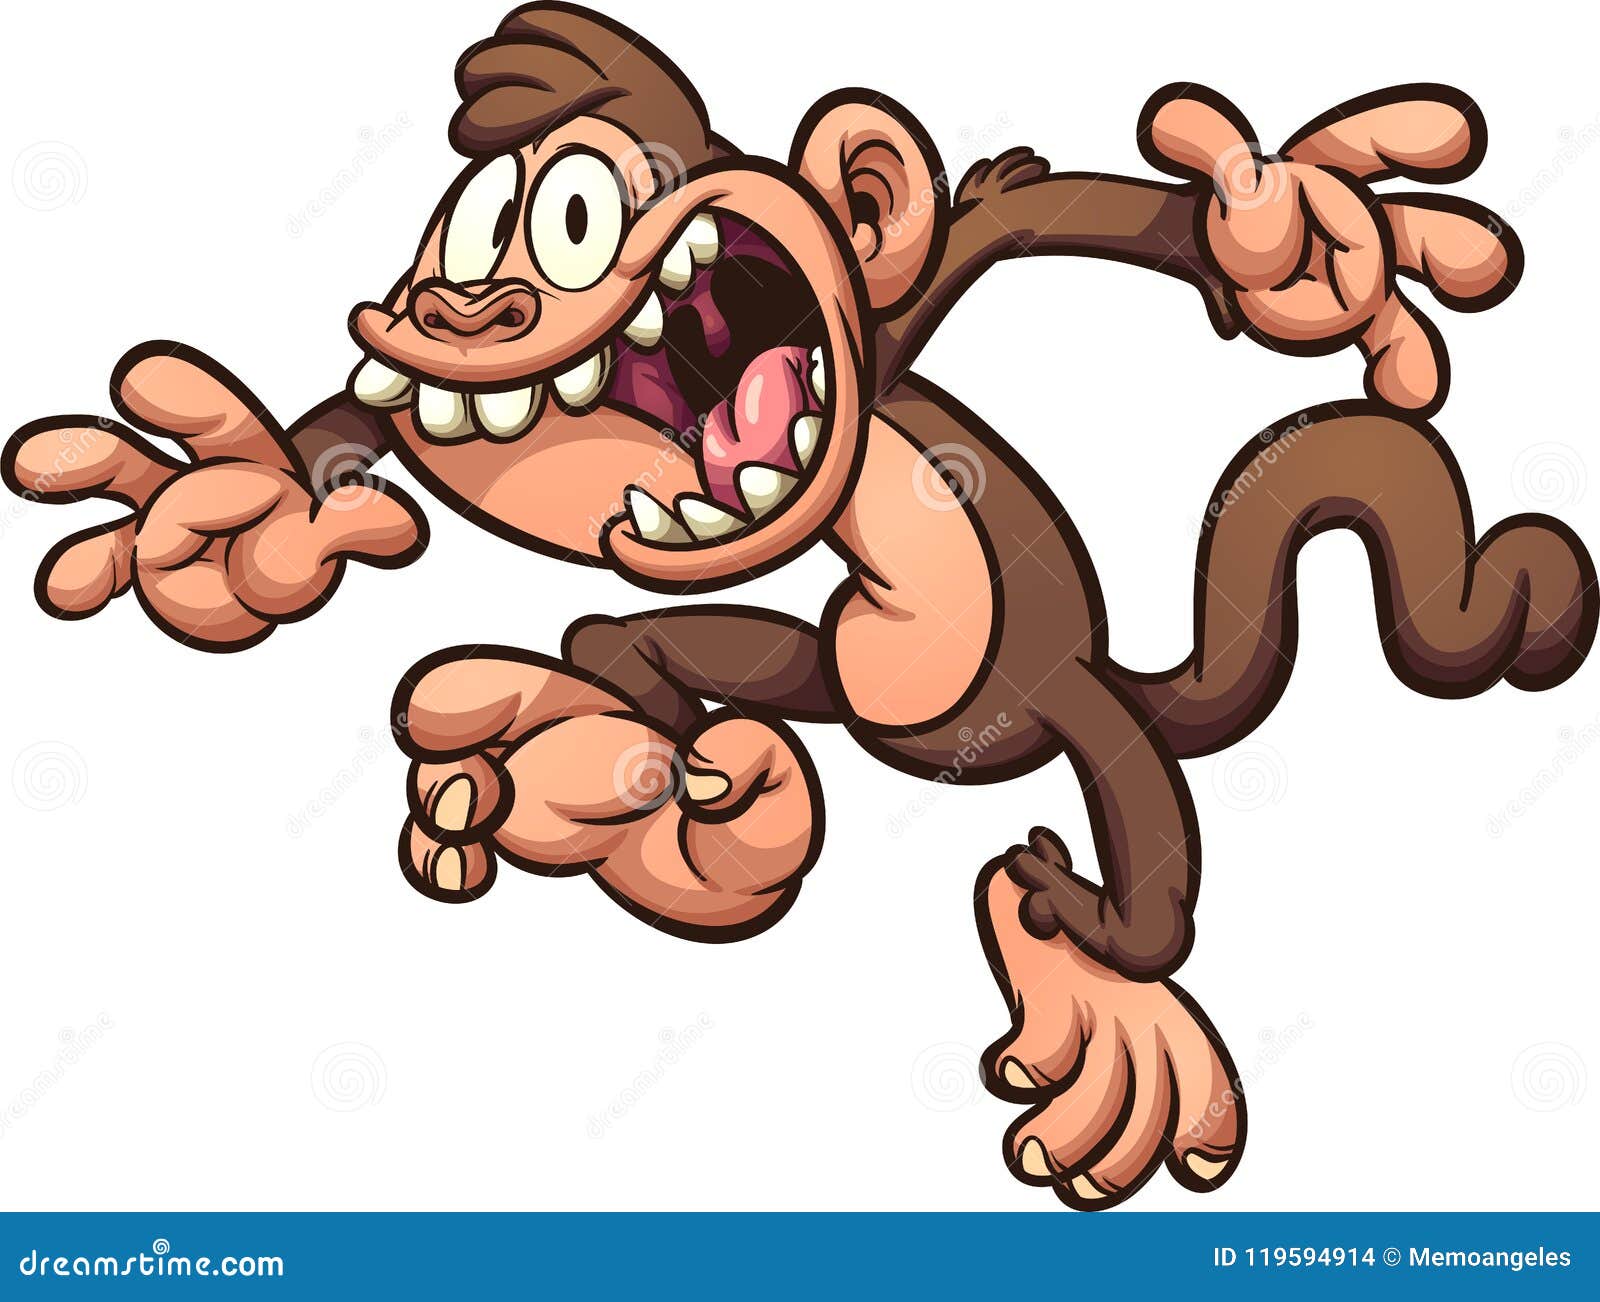 Screaming cartoon monkey stock vector. Illustration of brown - 119594914